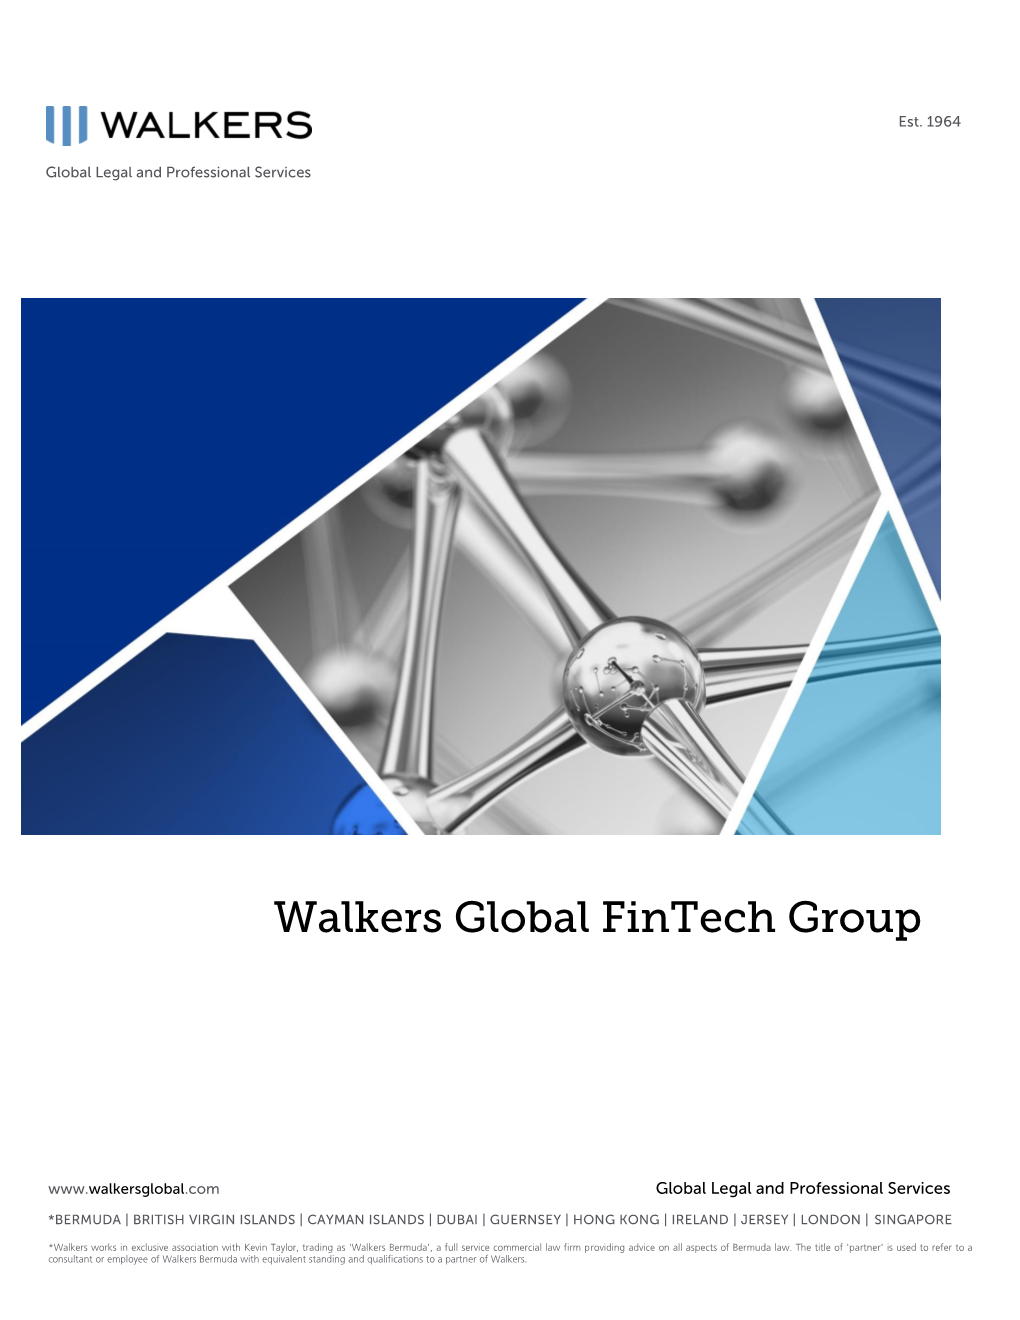 Walkers Global Fintech Group